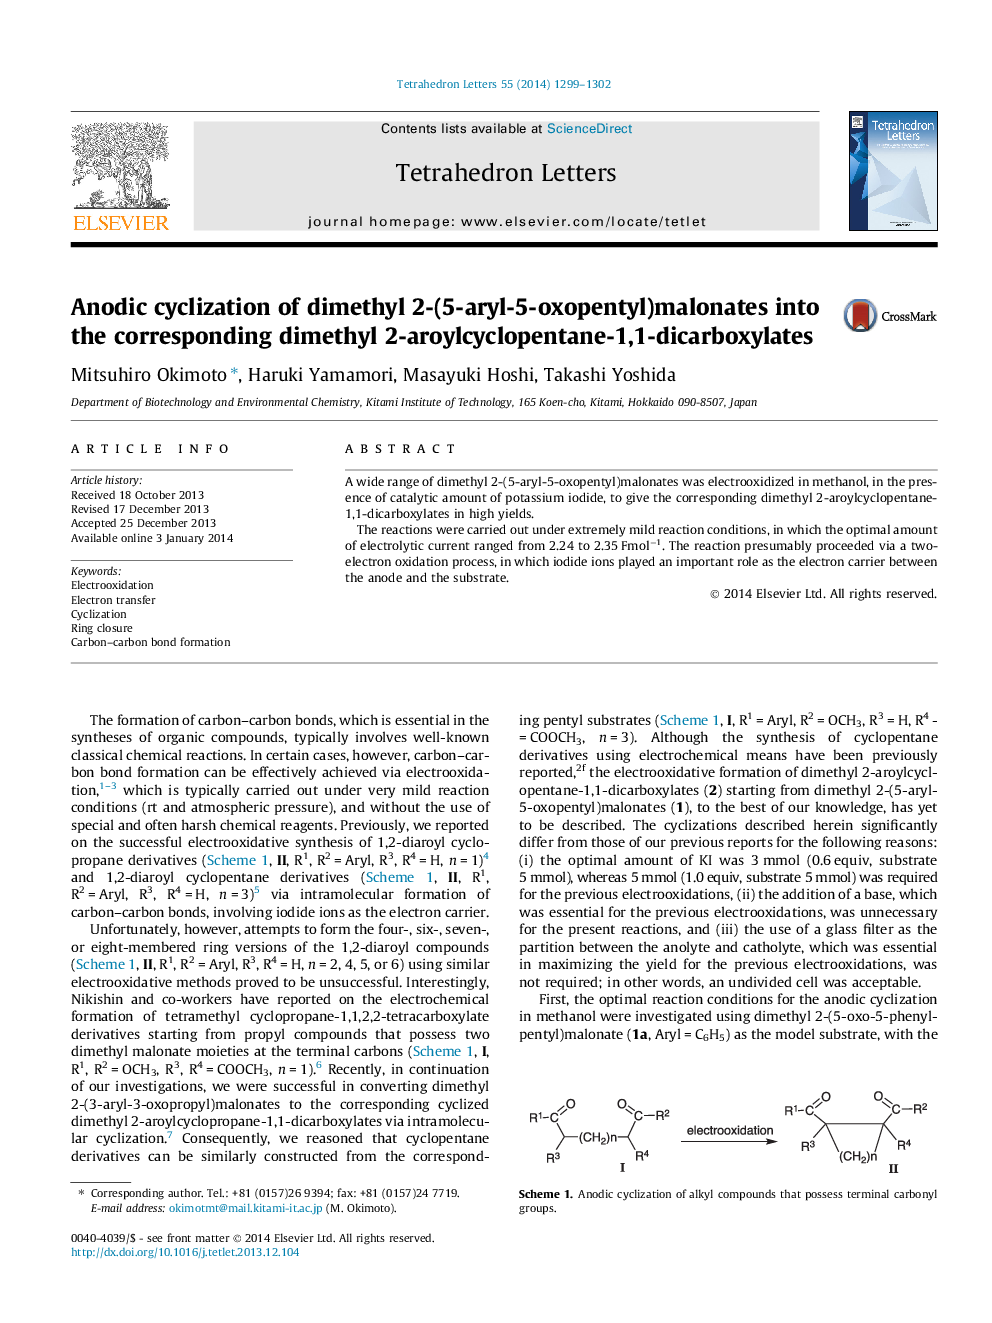 Anodic cyclization of dimethyl 2-(5-aryl-5-oxopentyl)malonates into the corresponding dimethyl 2-aroylcyclopentane-1,1-dicarboxylates